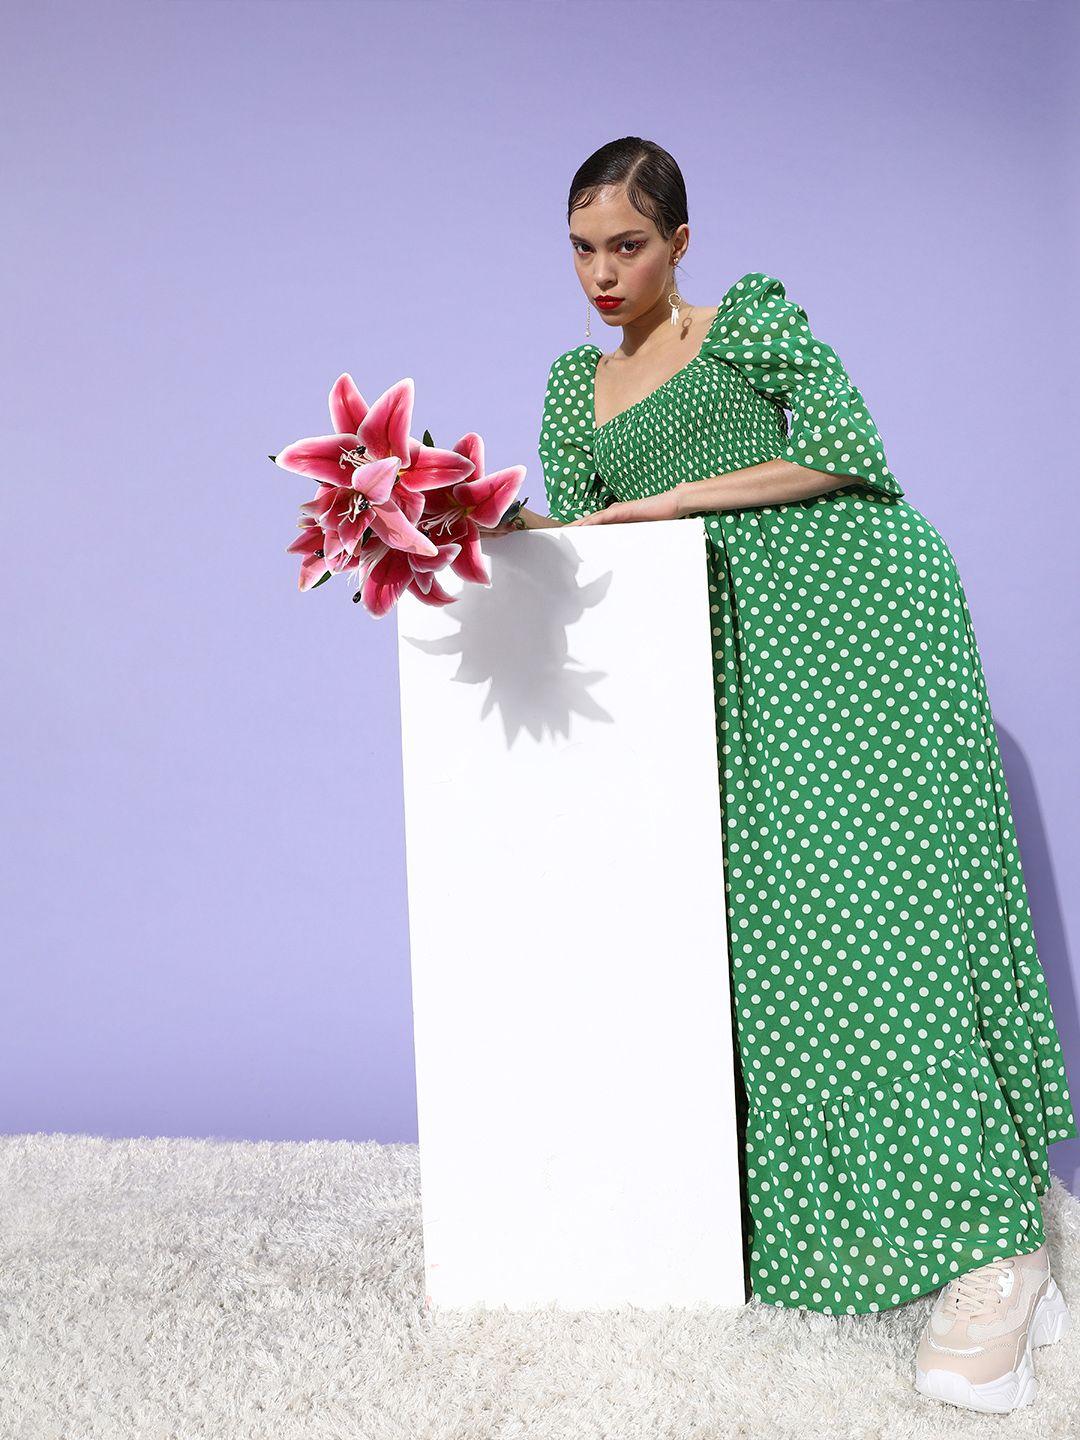 stylestone women gorgeous green polka-dotted dress